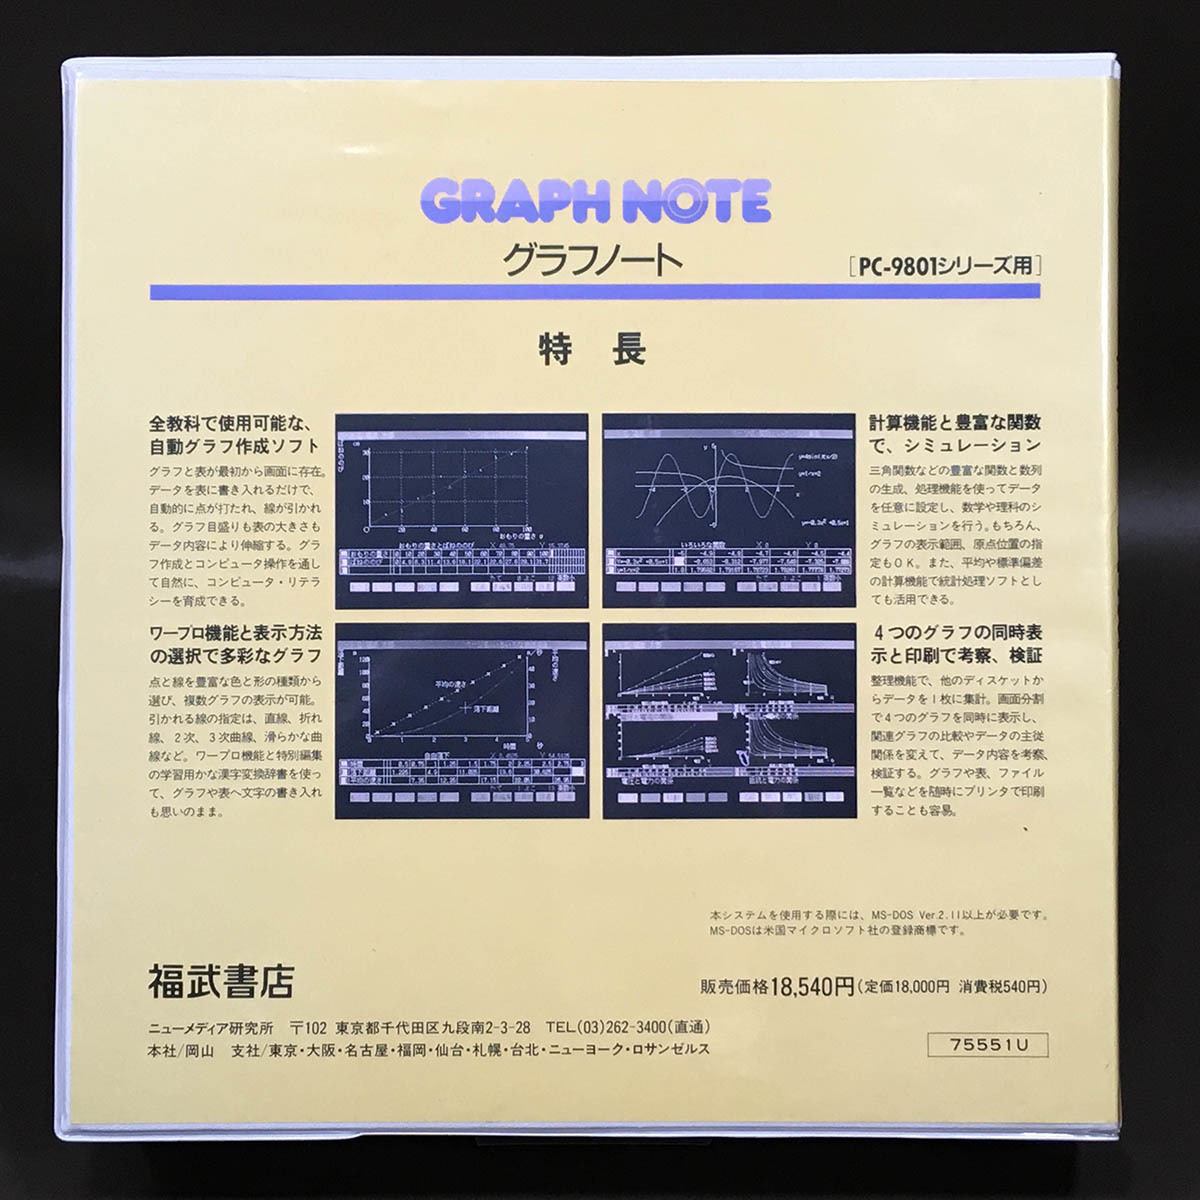  удача . книжный магазин lGRAPH NOTElPC-9801 серии для l2HDl75551Ul graph Note lbenesel31592